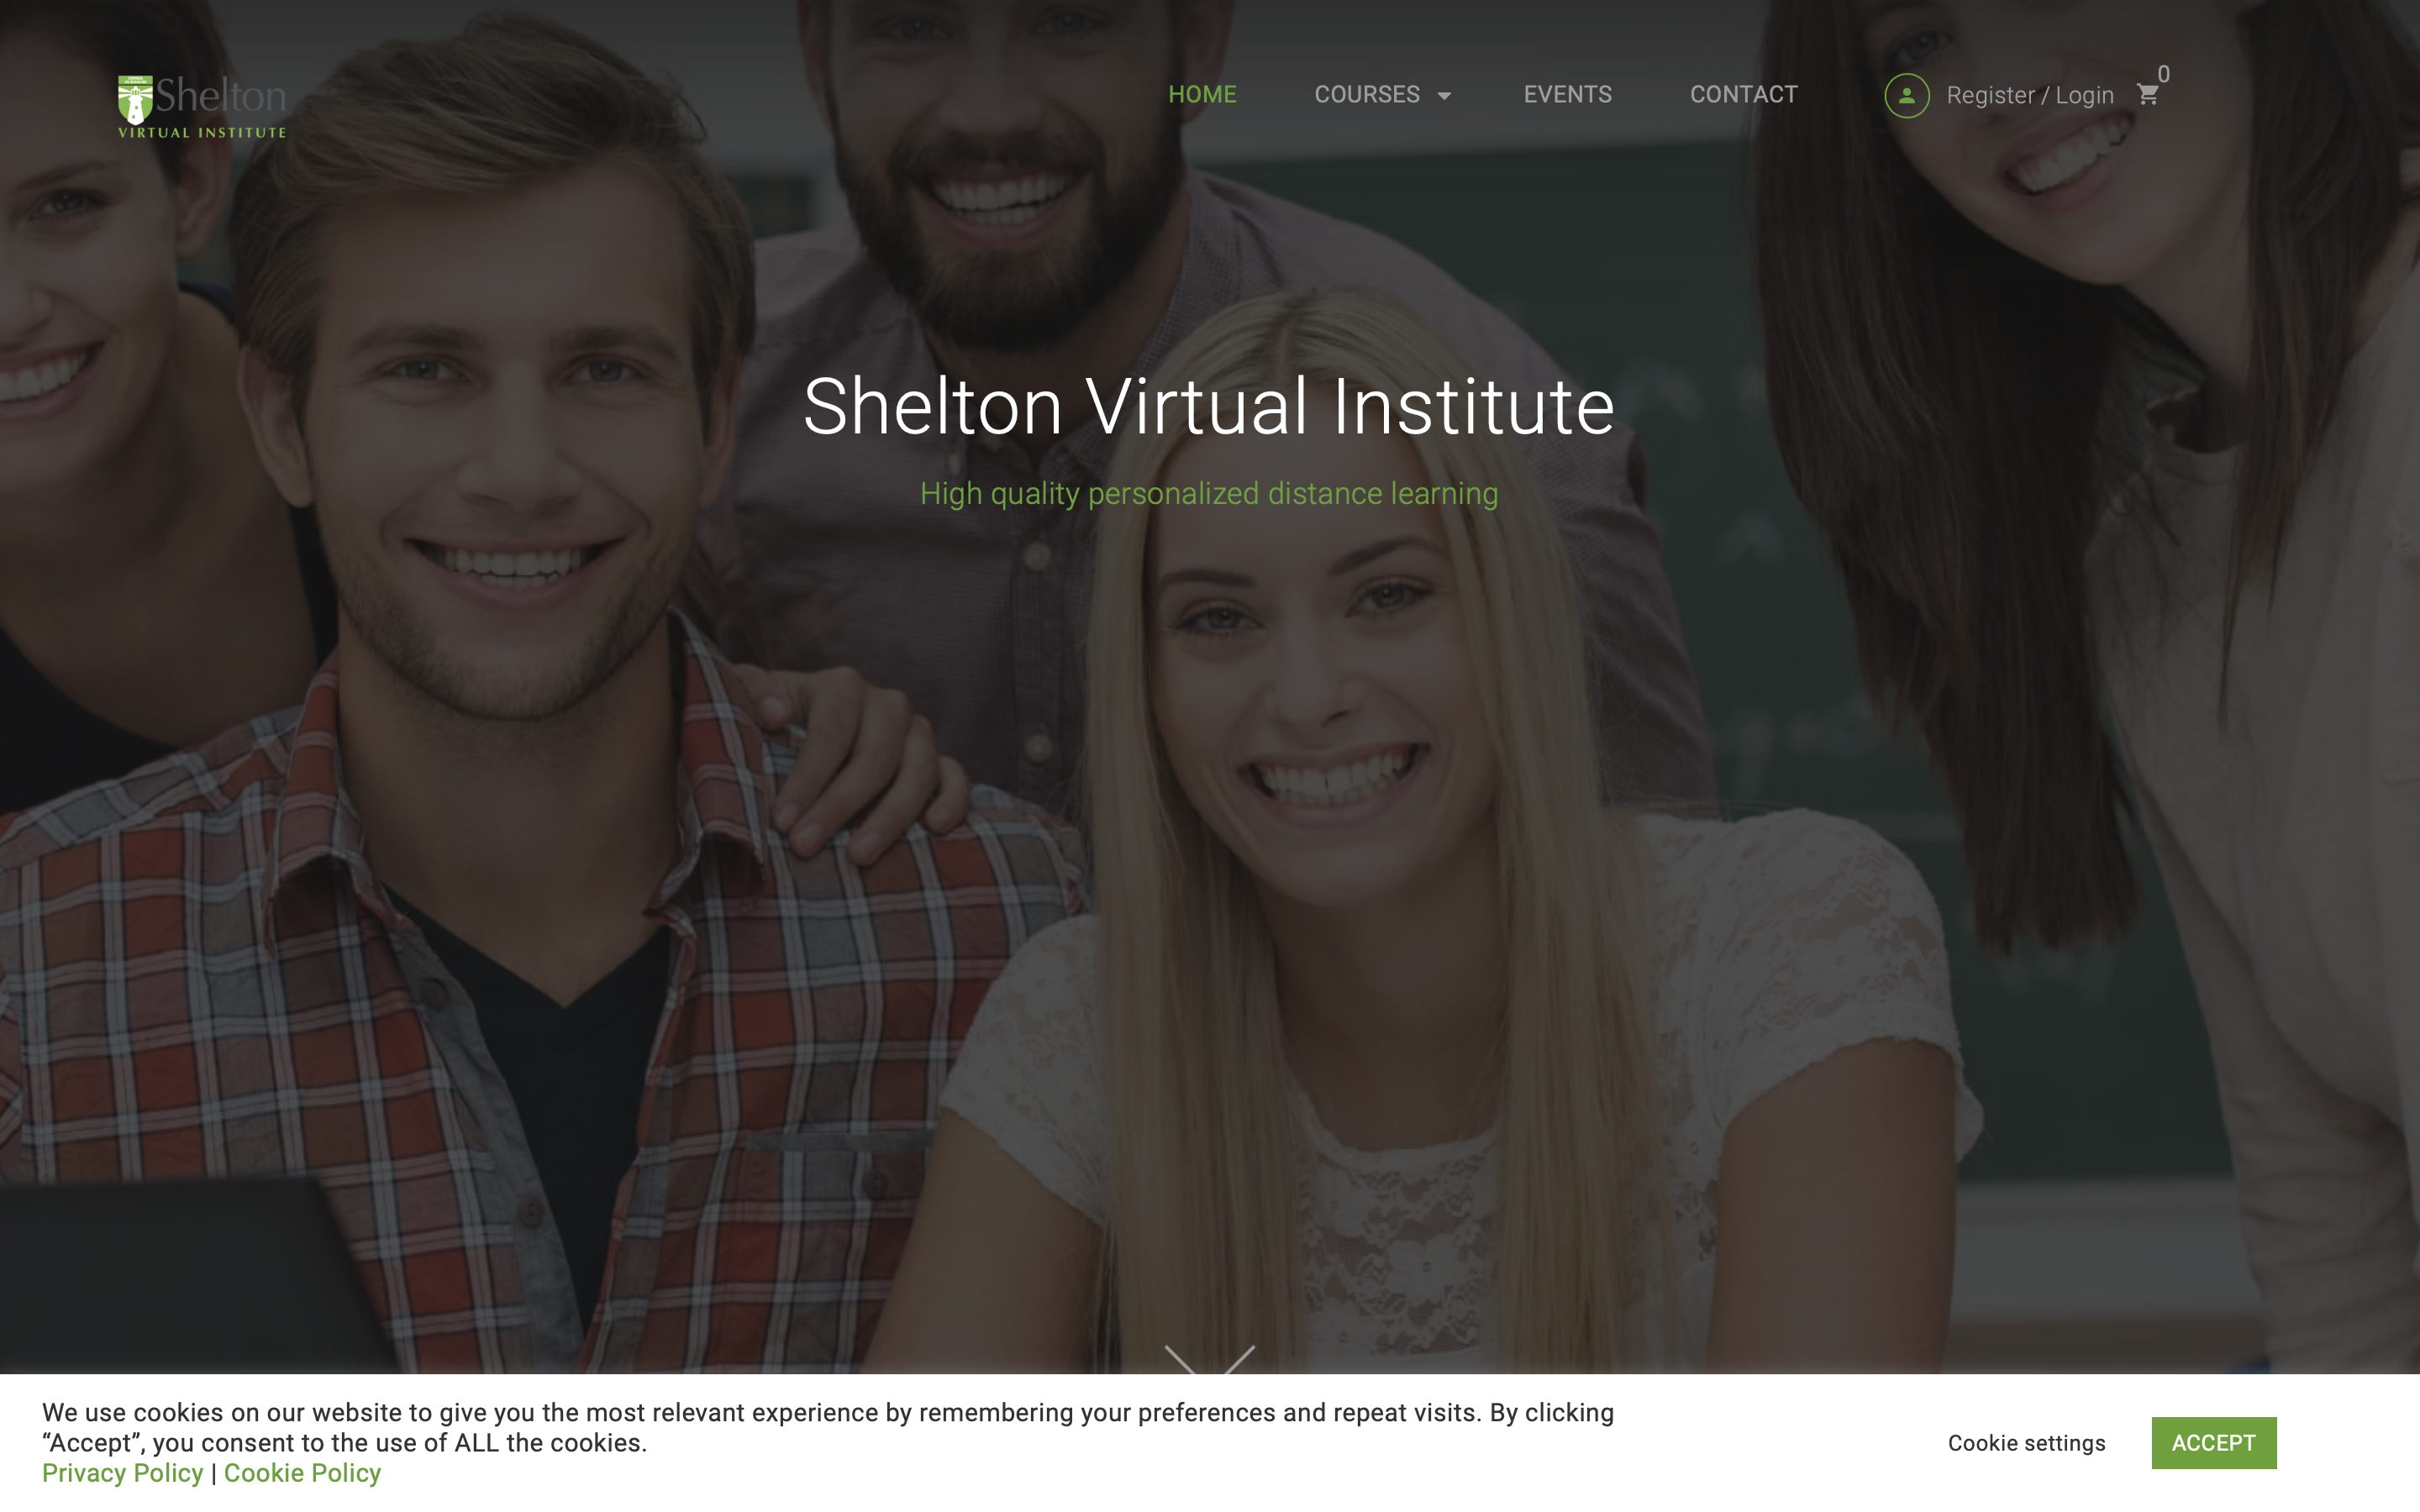 Shelton Virtual Institute at Miami